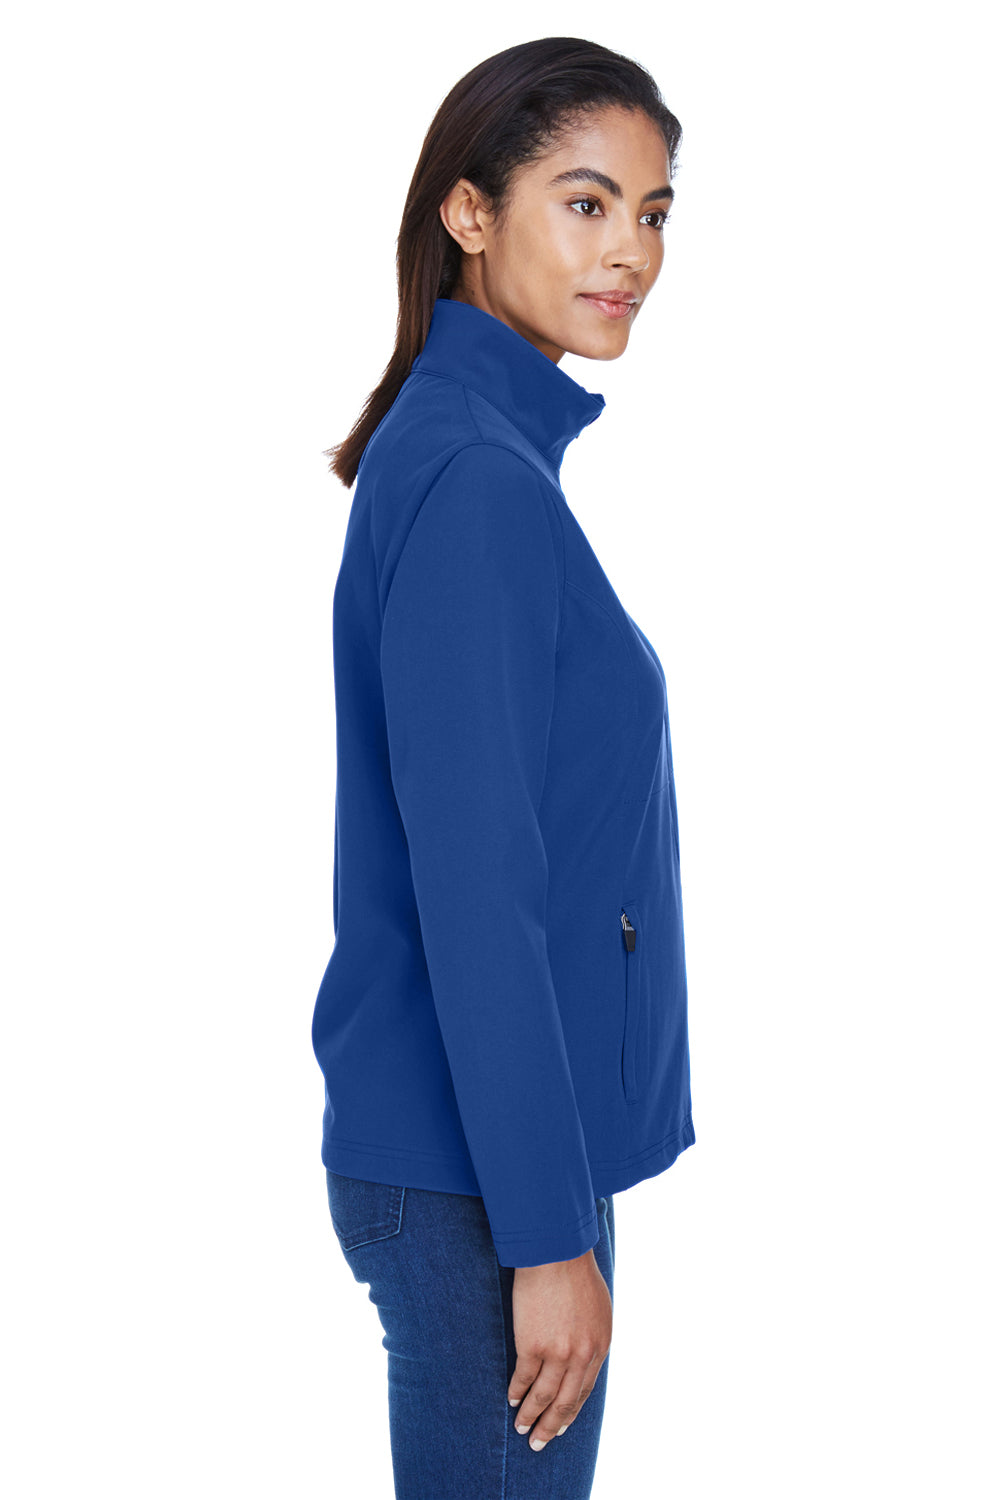 Team 365 TT80W Womens Leader Waterproof Full Zip Jacket Royal Blue Side